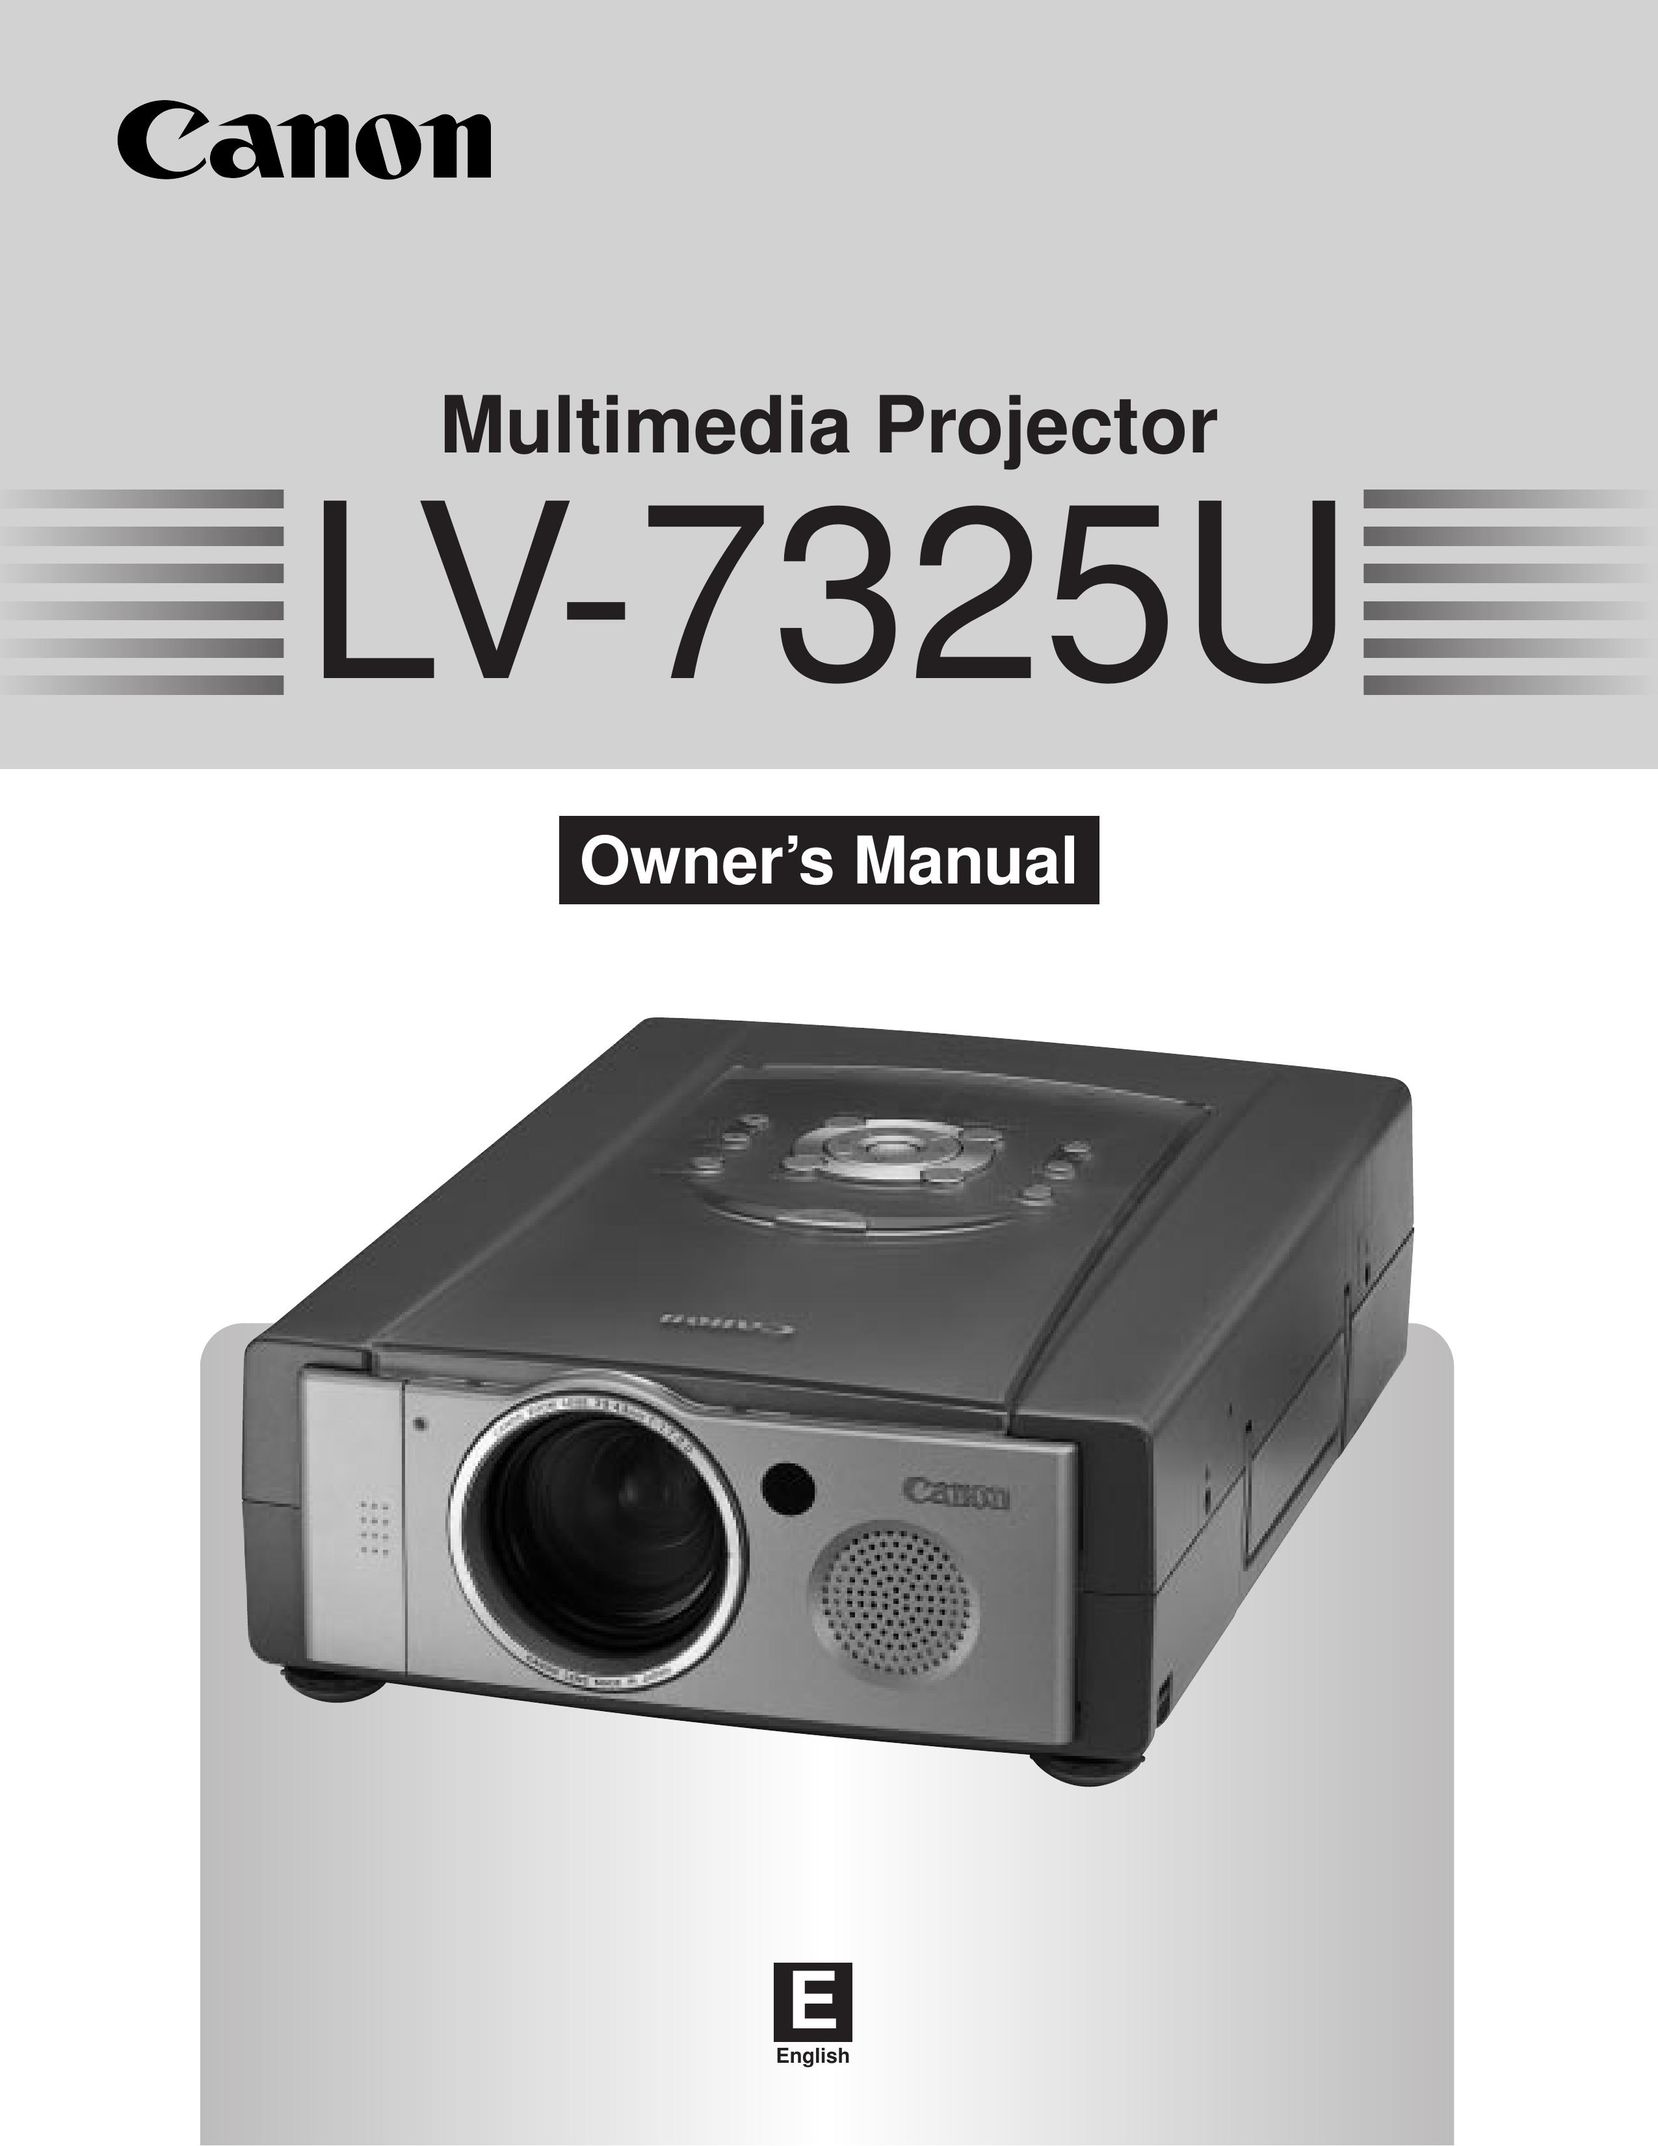 Canon LV-7325U Projector User Manual